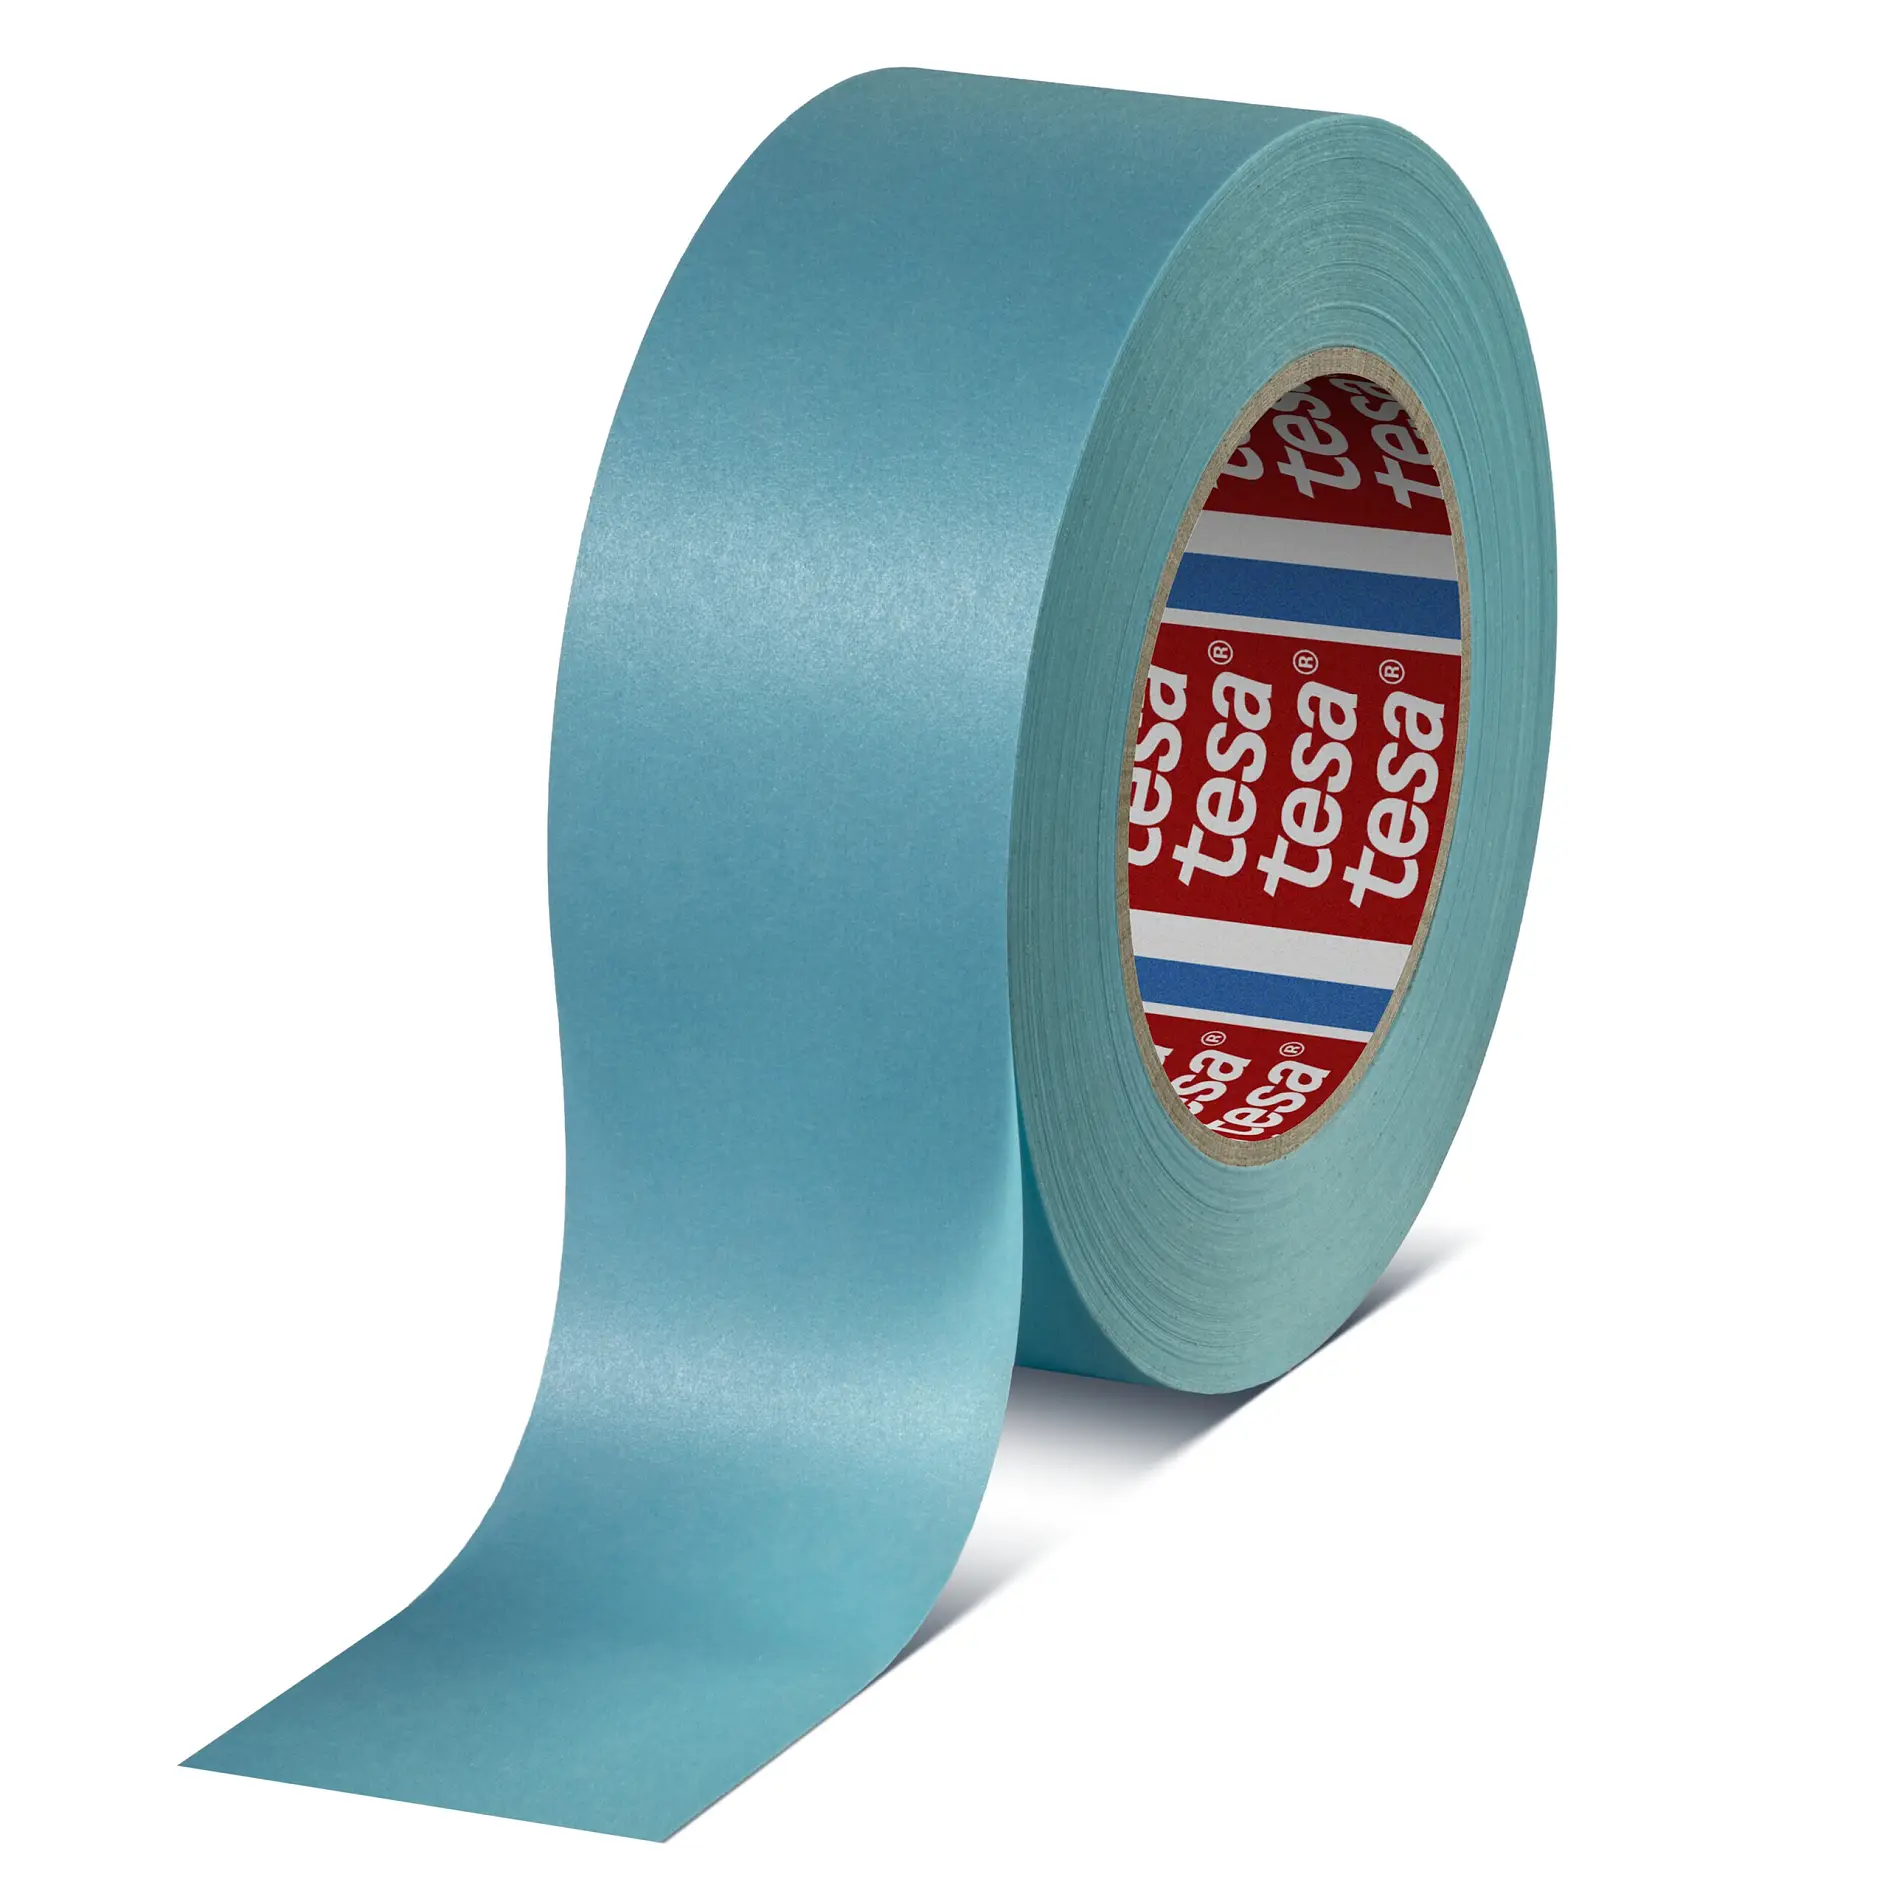 tesa-4438-UV-surface-protection-tape-blue-044380002000